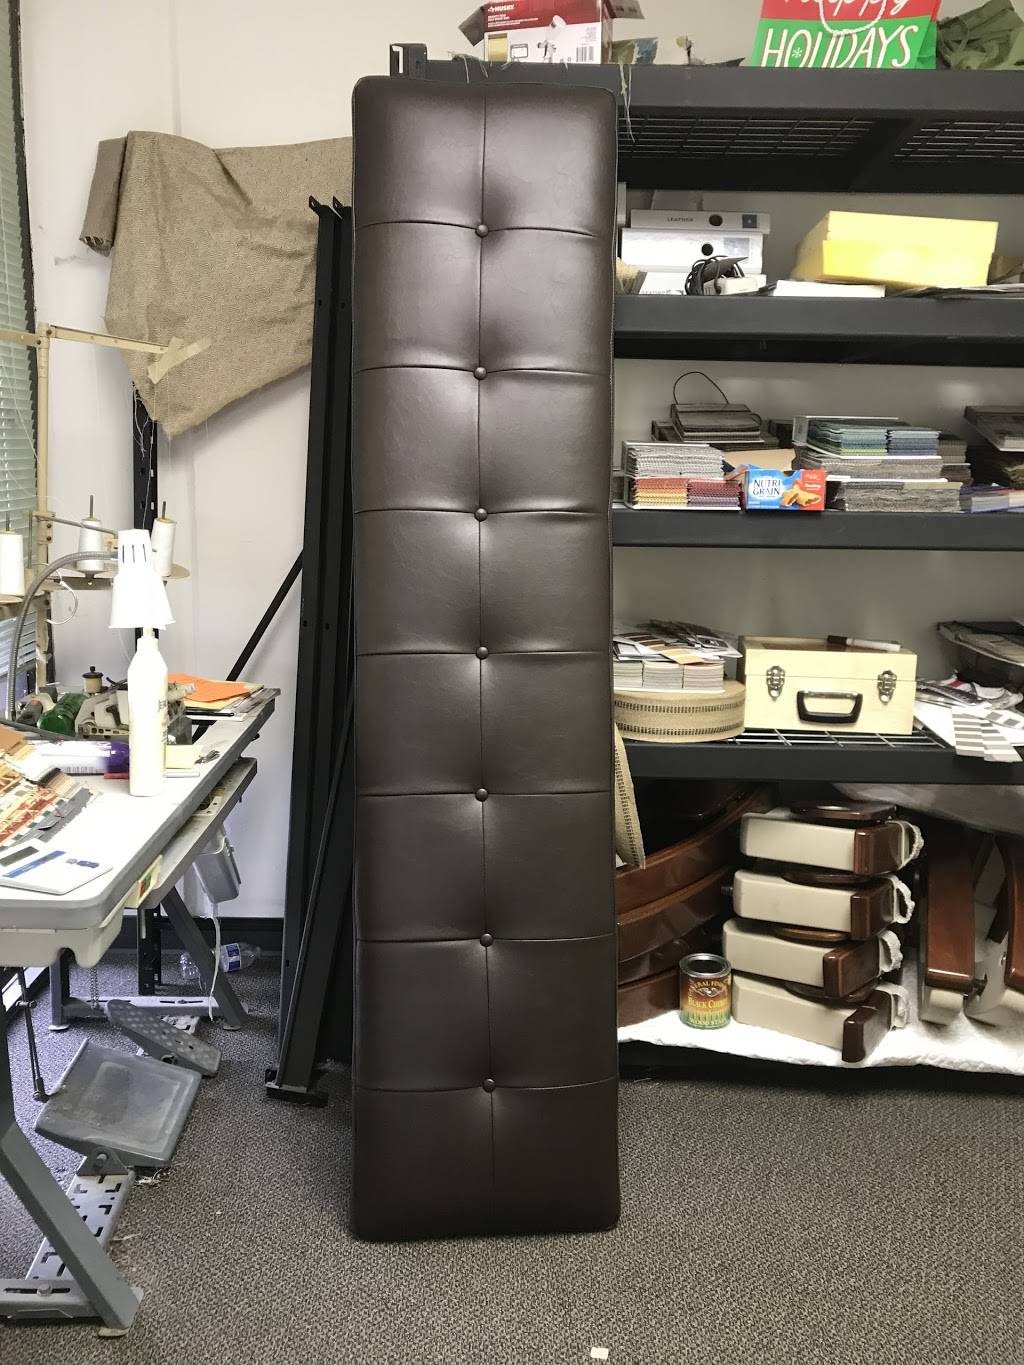 Pauls Upholstery - Couch, Sofa, Chair Upholstery Shop in Santa  | 3325 W Harvard St, Santa Ana, CA 92704, USA | Phone: (714) 913-0495